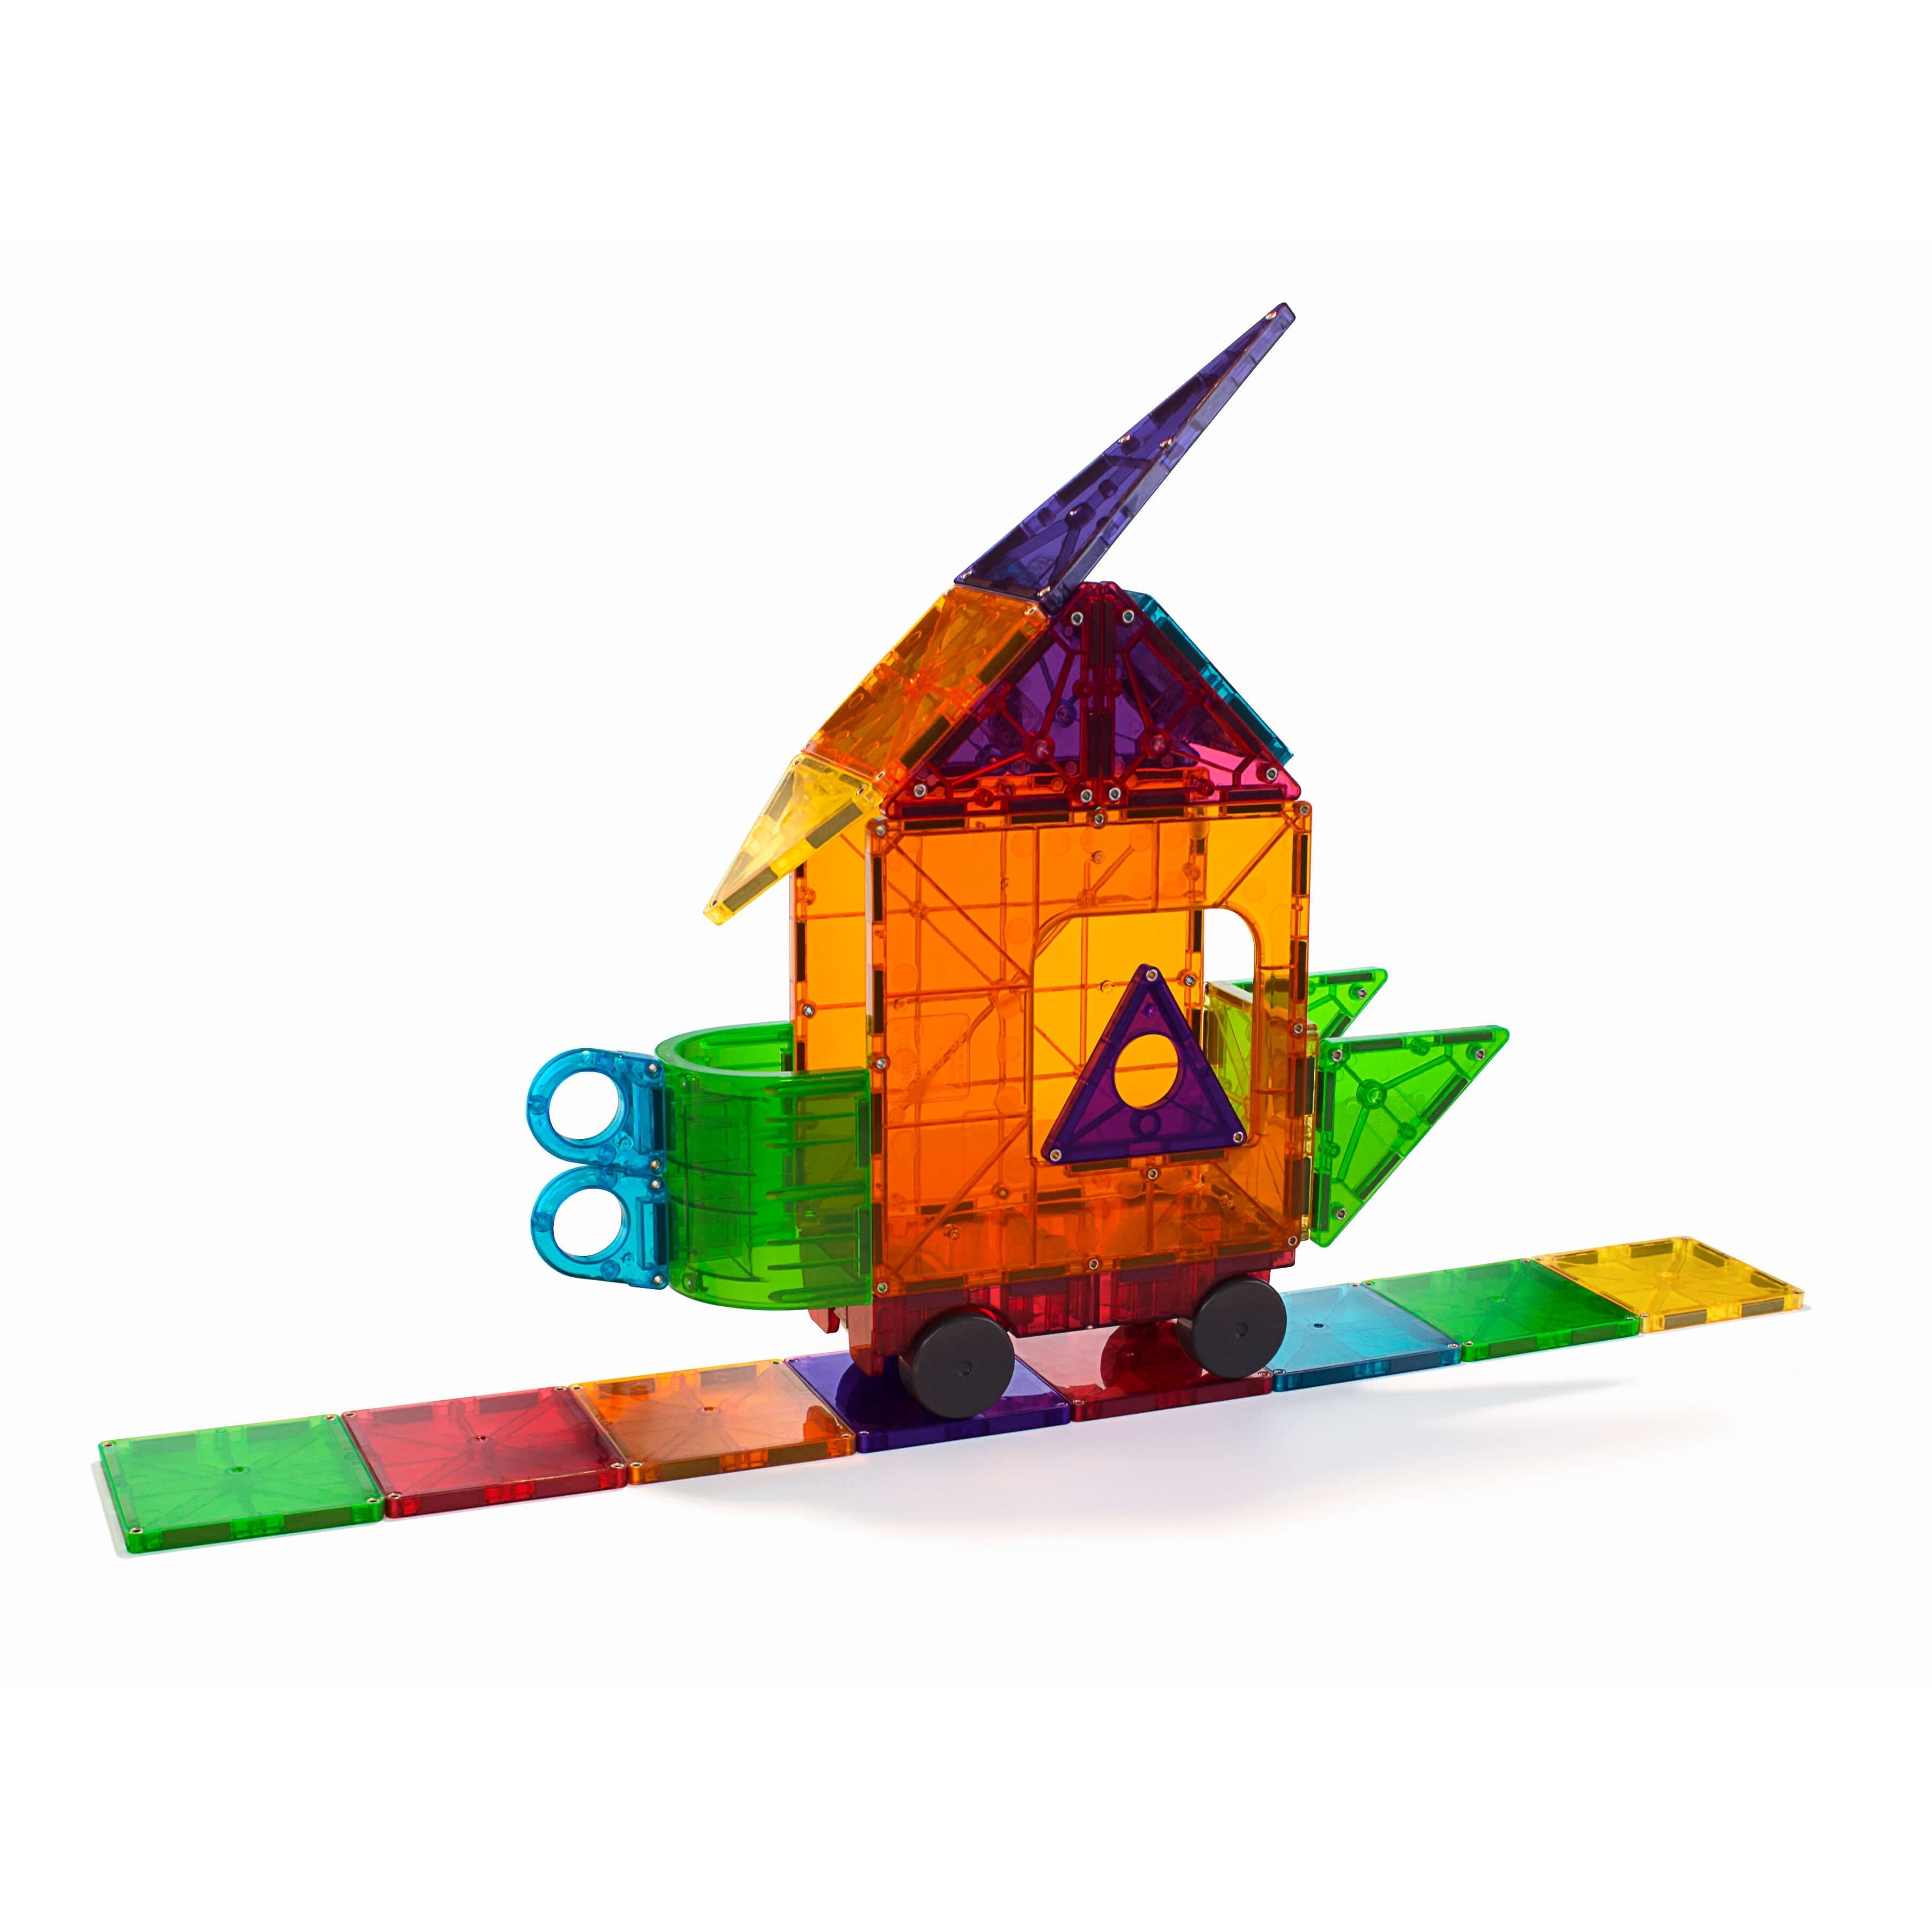 Magna-Tiles-Magna-Tiles 48 Piece Set - Clear Colors-12148-Legacy Toys